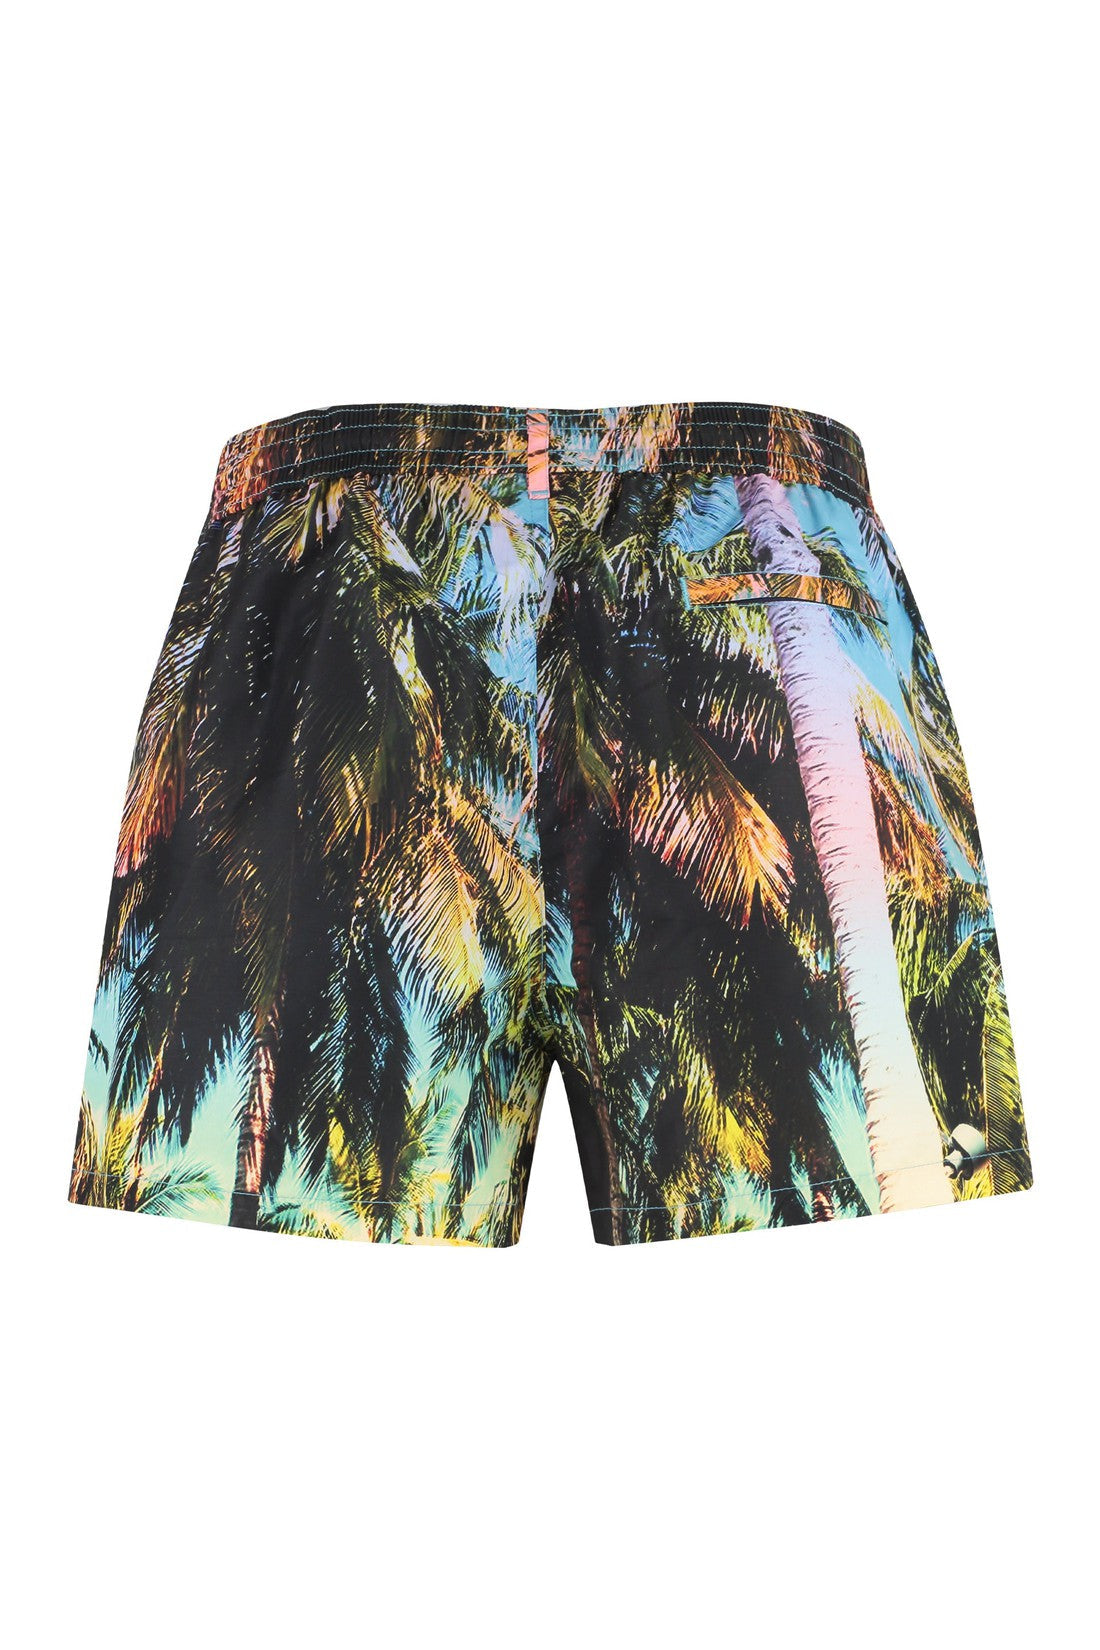 Paul Smith-OUTLET-SALE-Printed swim shorts-ARCHIVIST